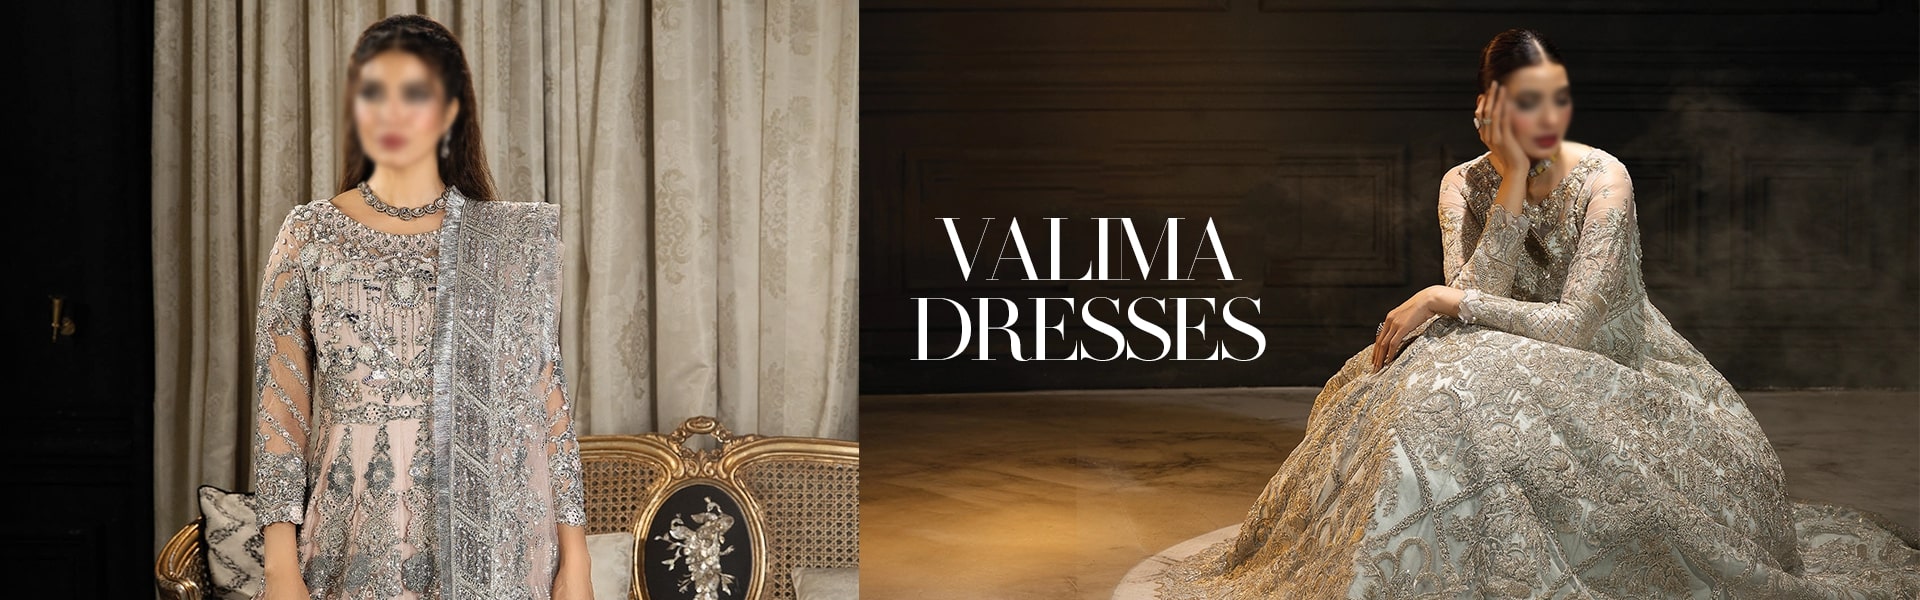 Valima Dresses